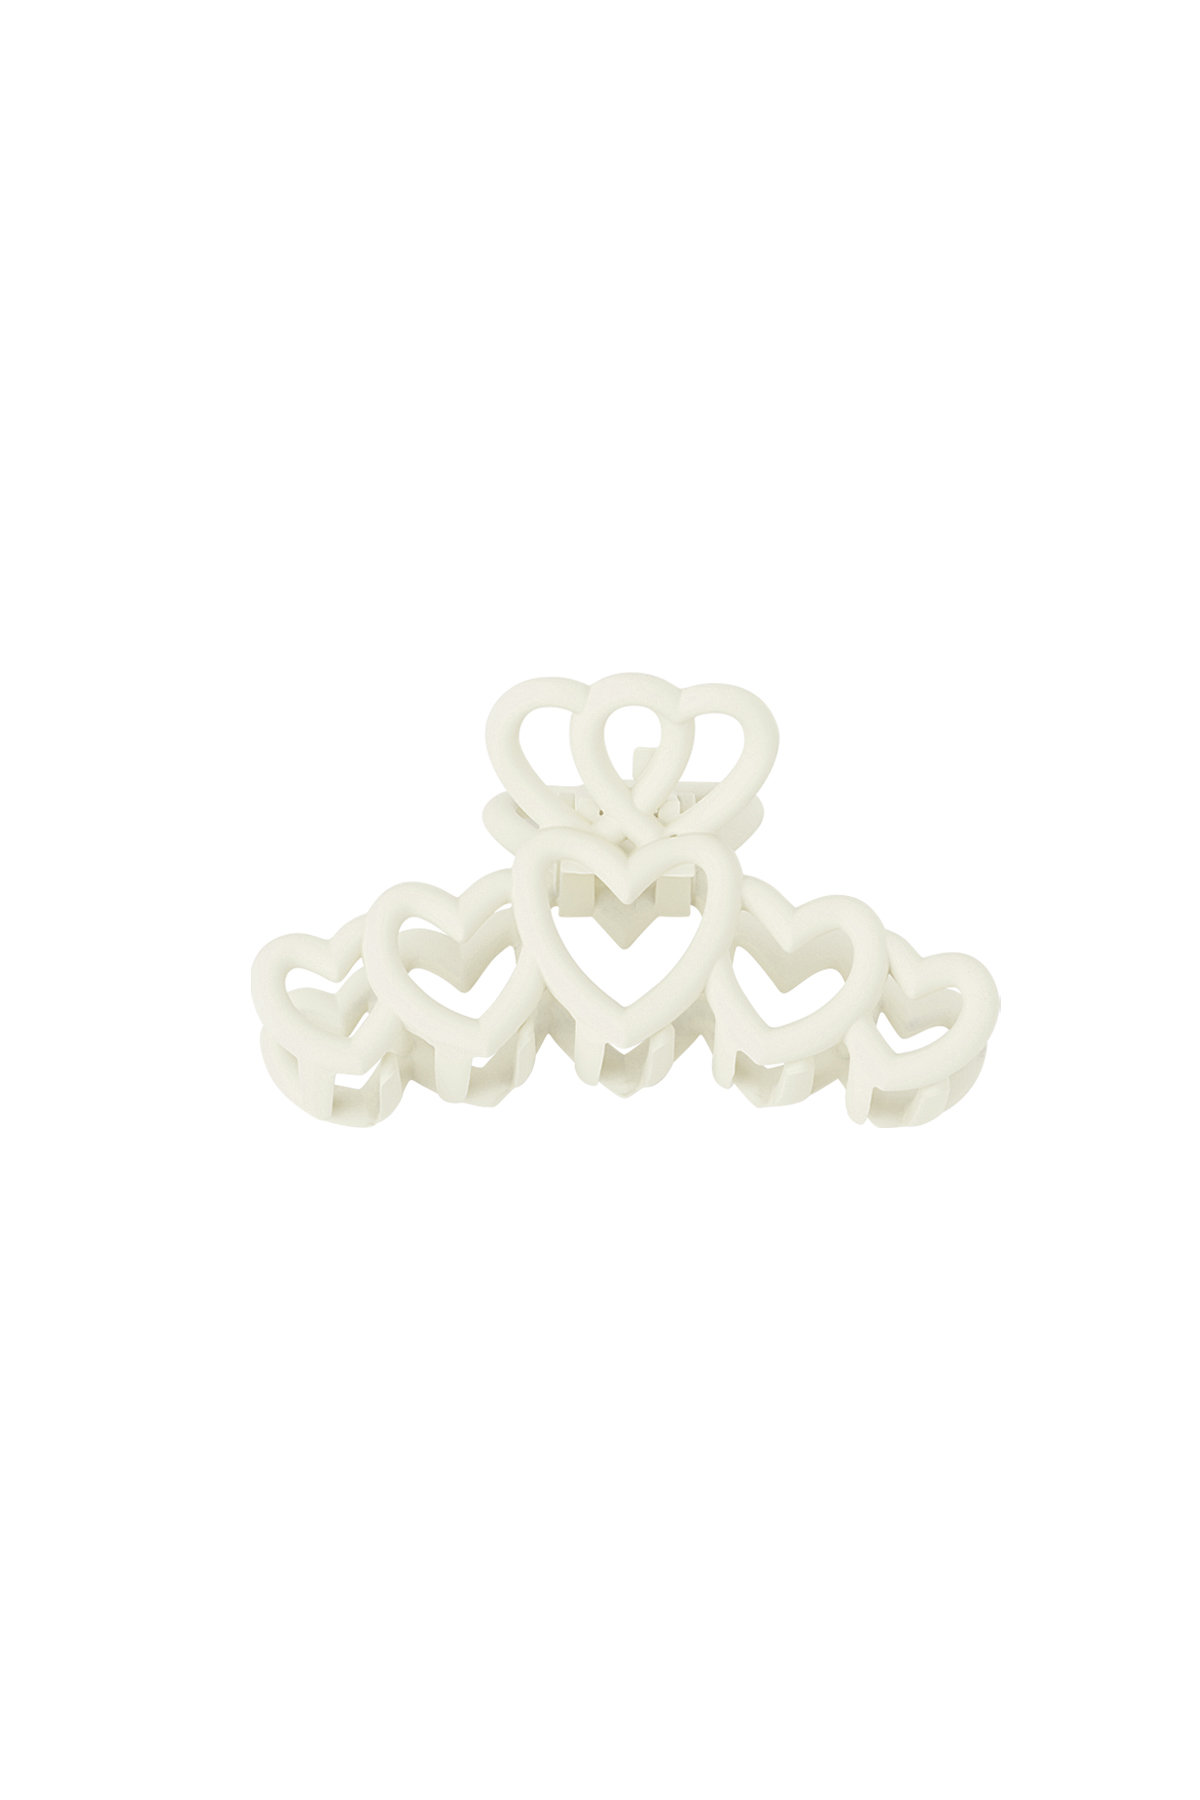 Hair clip hearts - cream Plastic